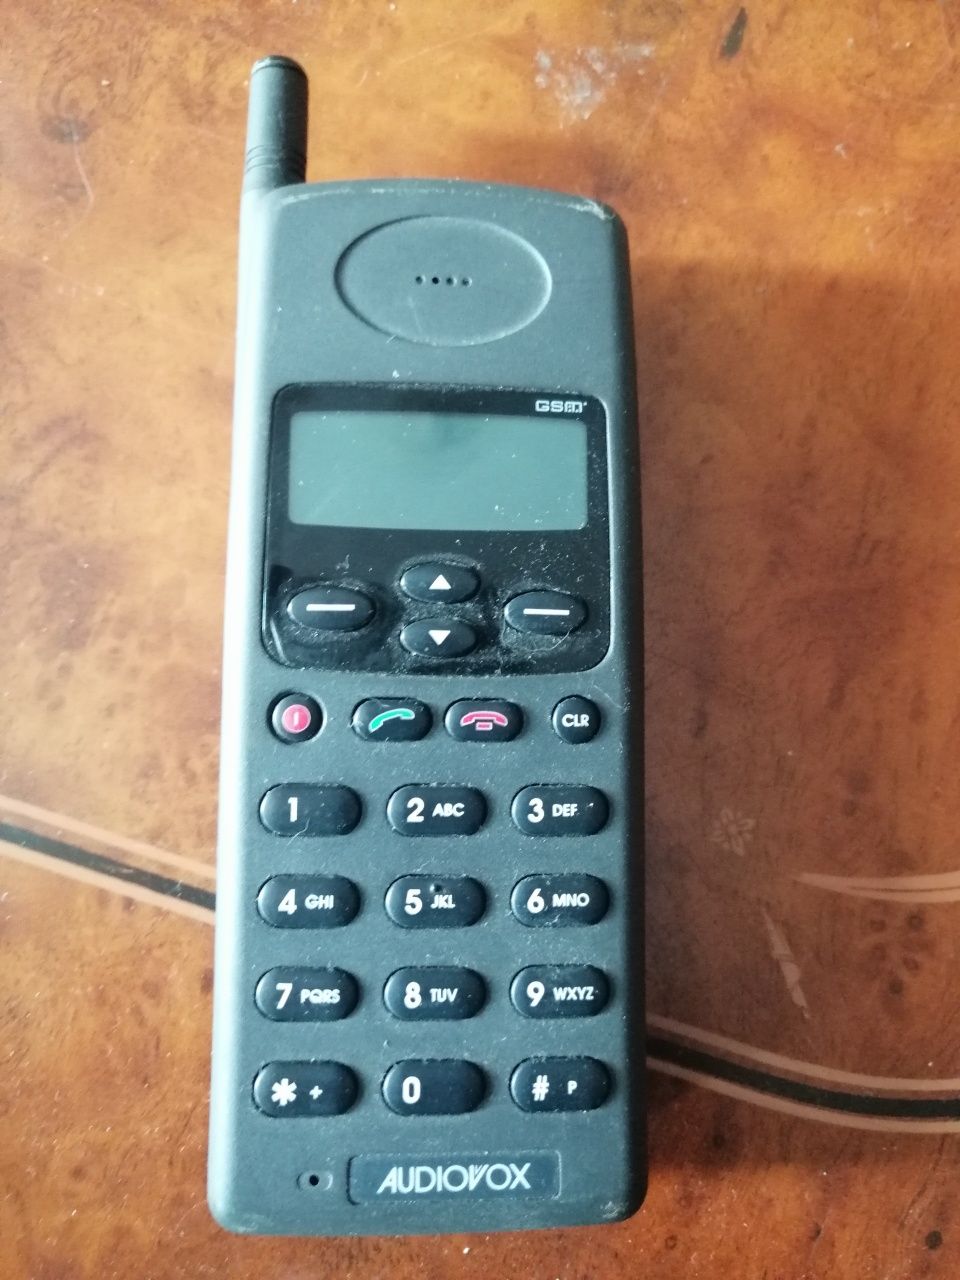 Telemóvel da marca Audiovox GSM 680